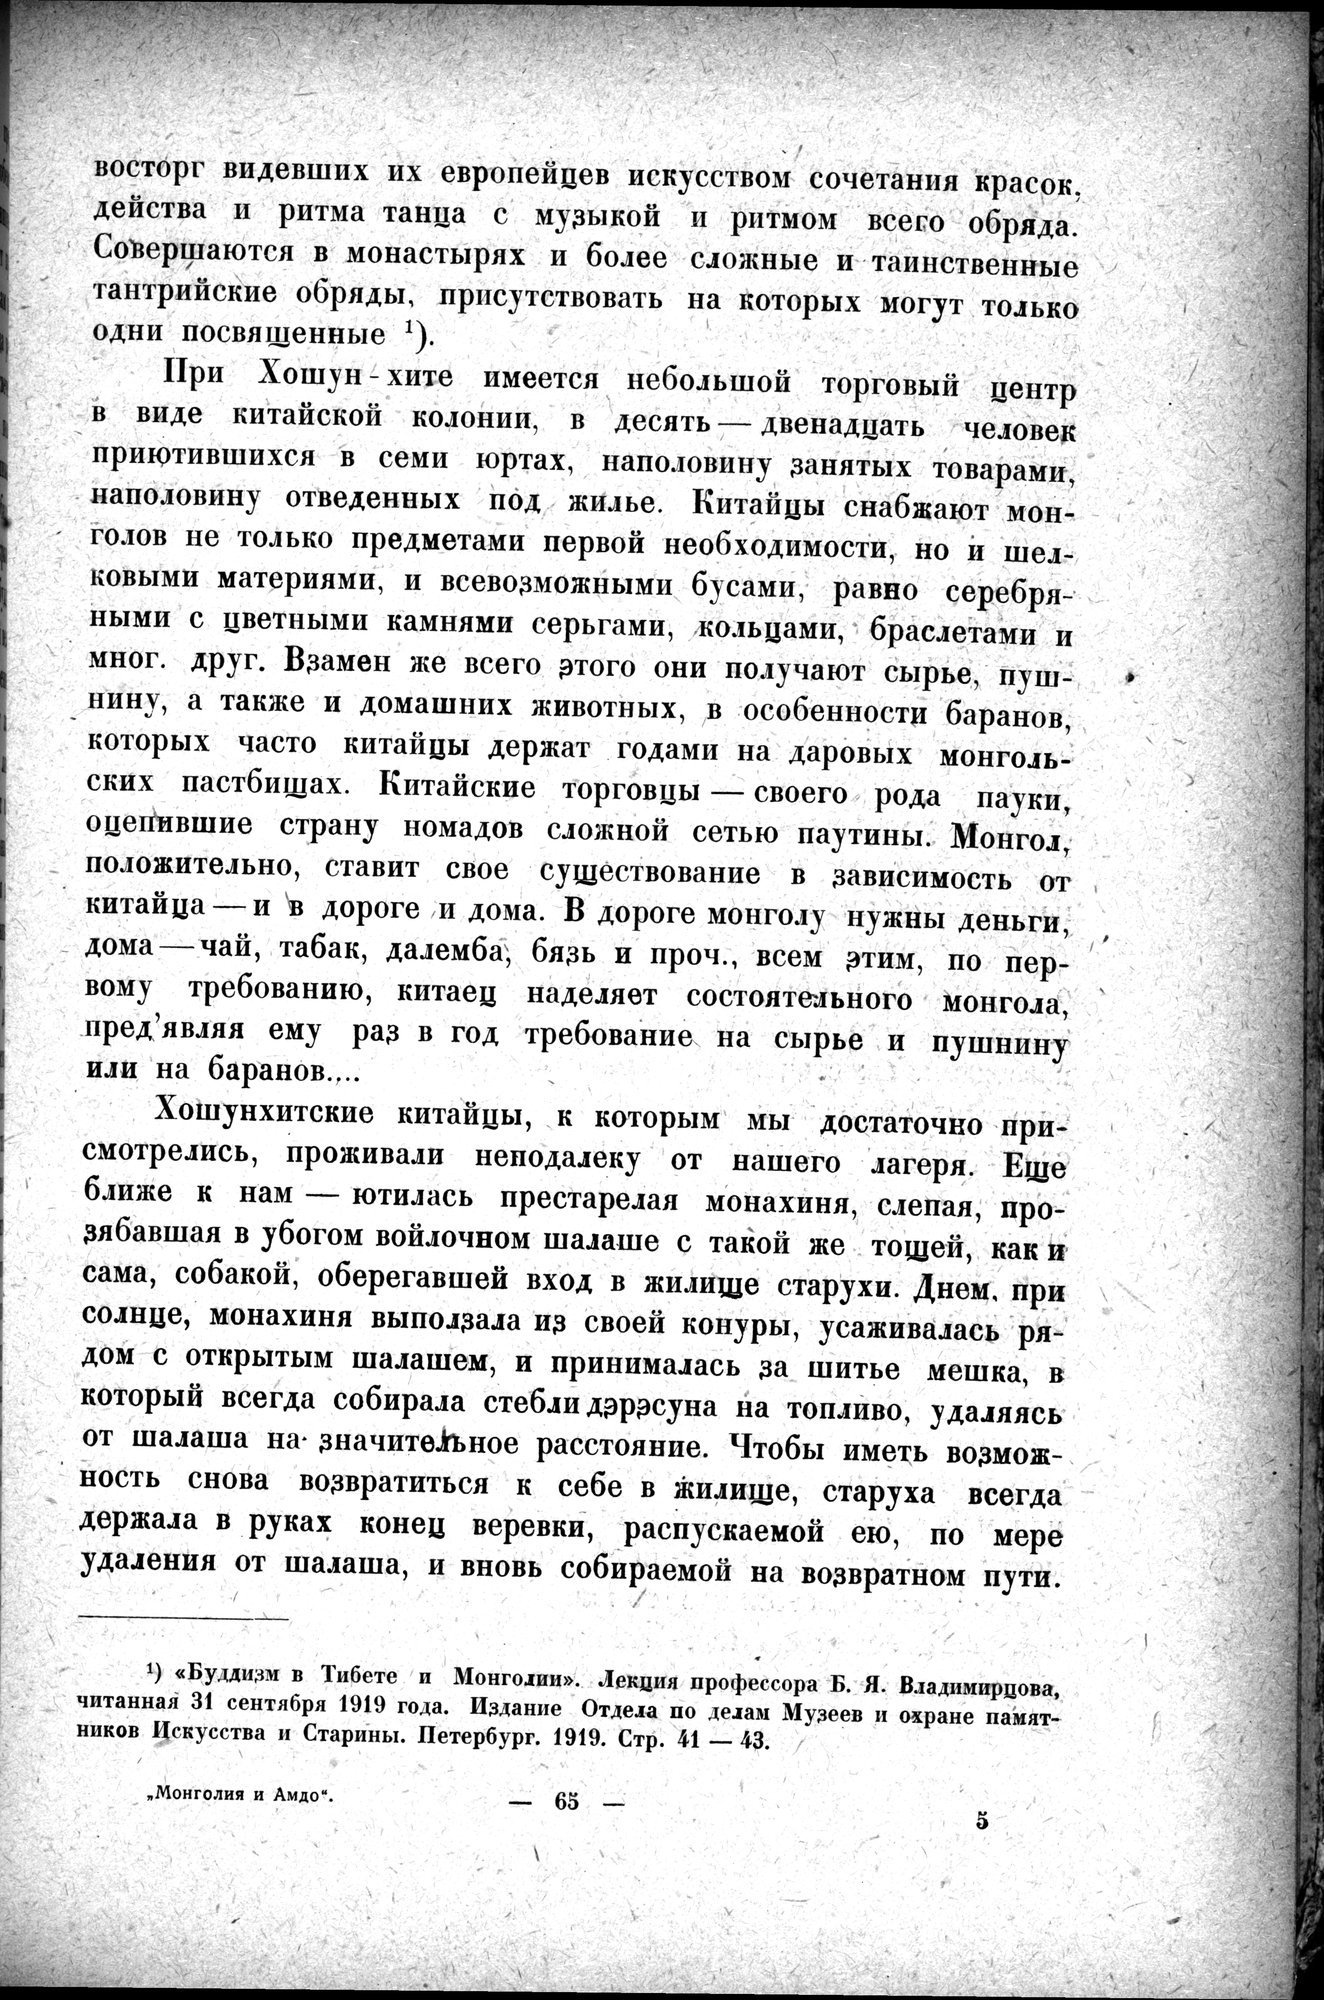 Mongoliya i Amdo i mertby gorod Khara-Khoto : vol.1 / Page 89 (Grayscale High Resolution Image)